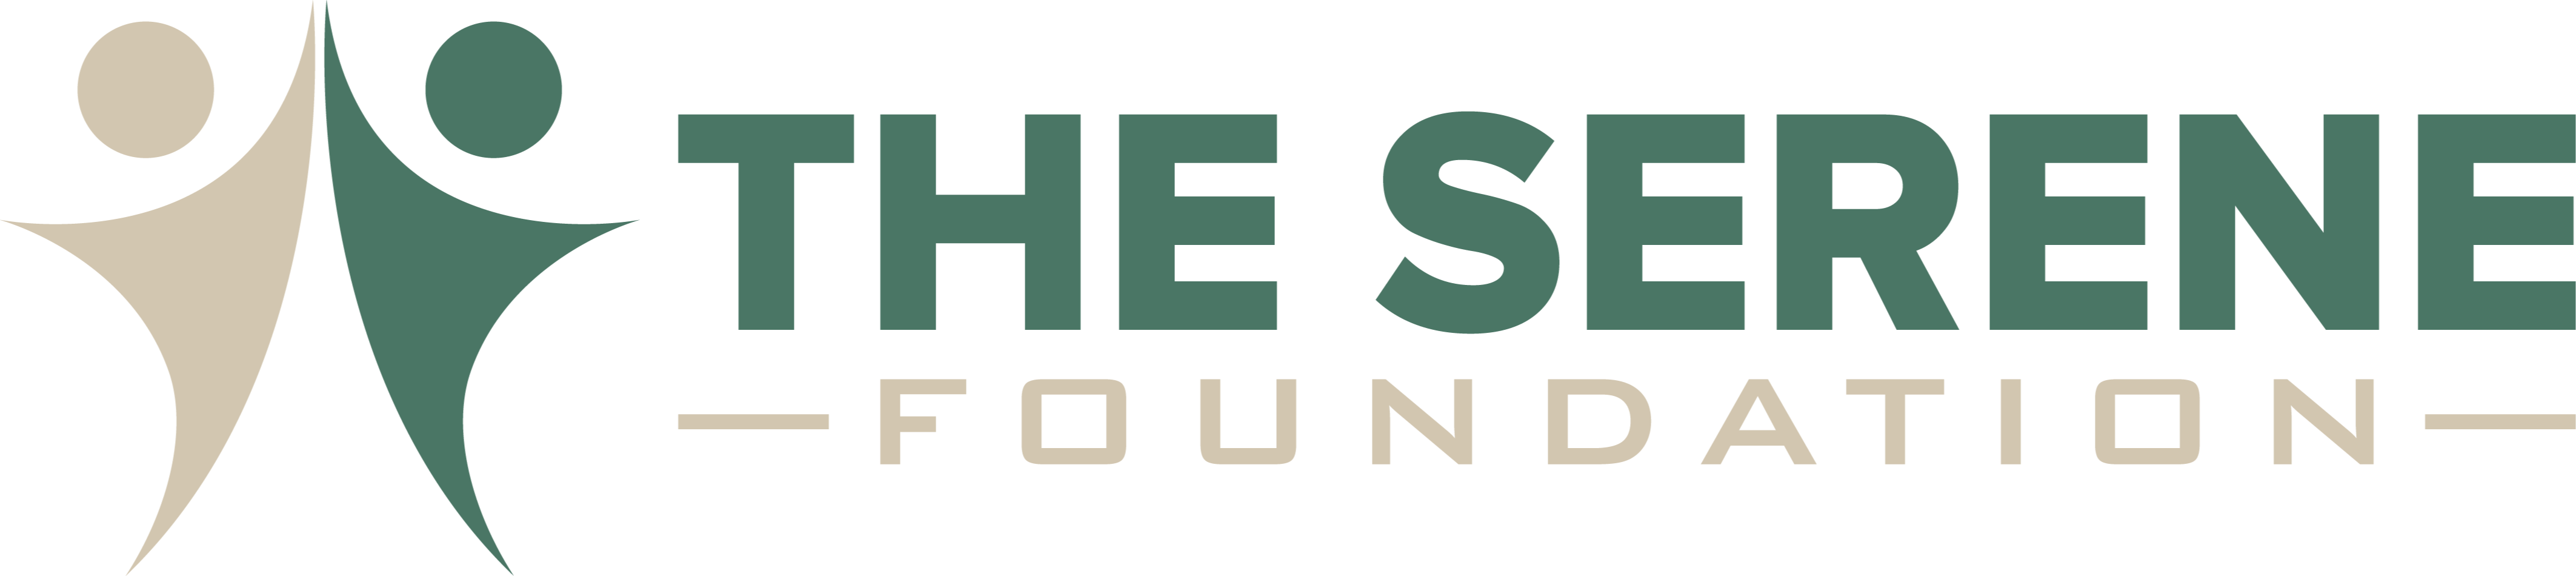 The Serene Foundation logo